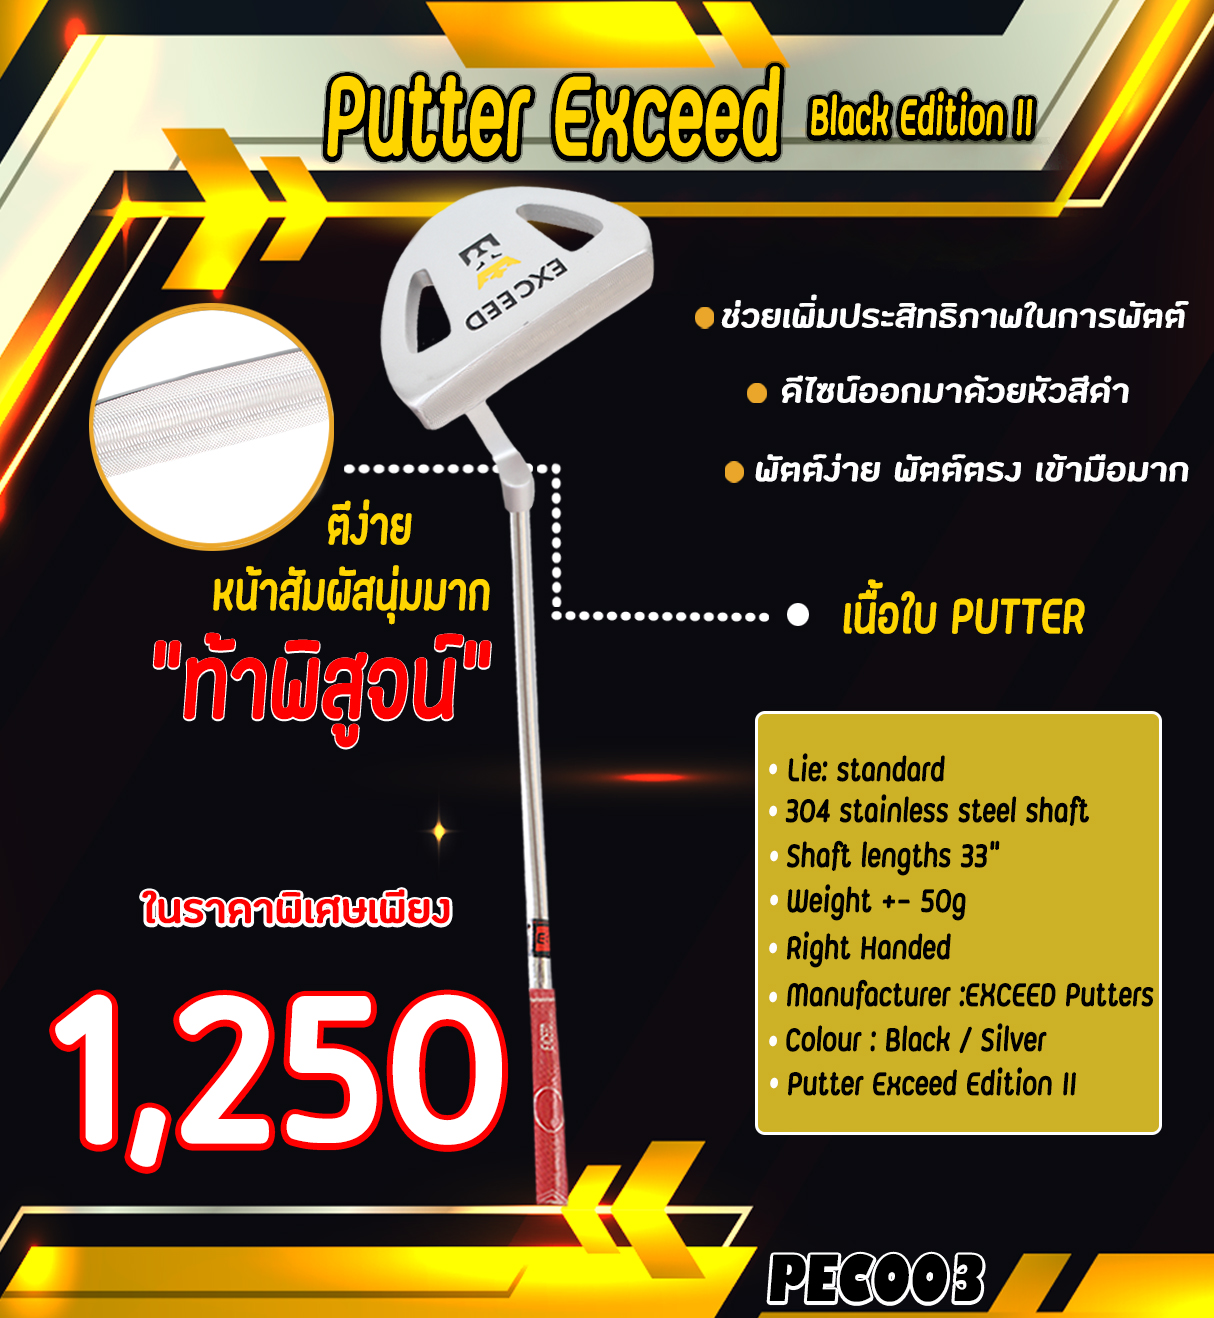 New Version Putter Exceed Silver/Black Edition II 2021 ไม้กอล์ฟ EXCEED ไม้พัตเตอร์ สำหรับกีฬากอล์ฟ PEC003